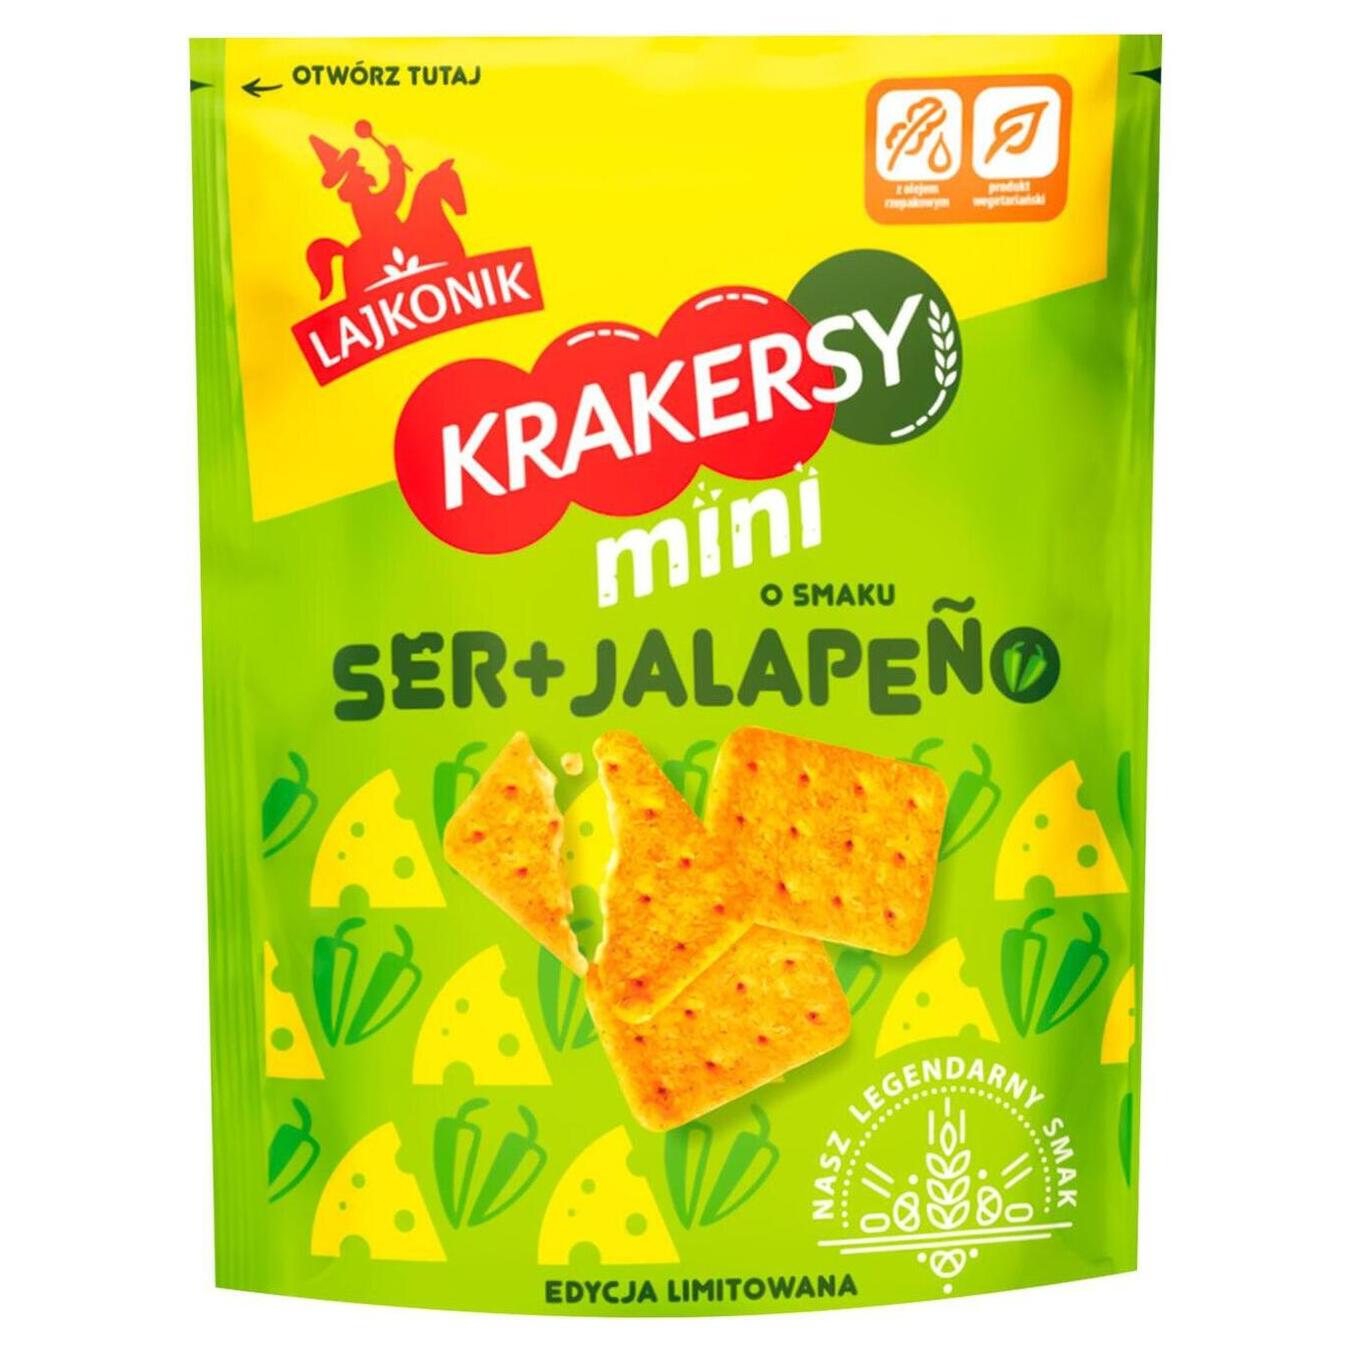 Cracker Lajkonik mini taste of cheese + jalapeño 100g